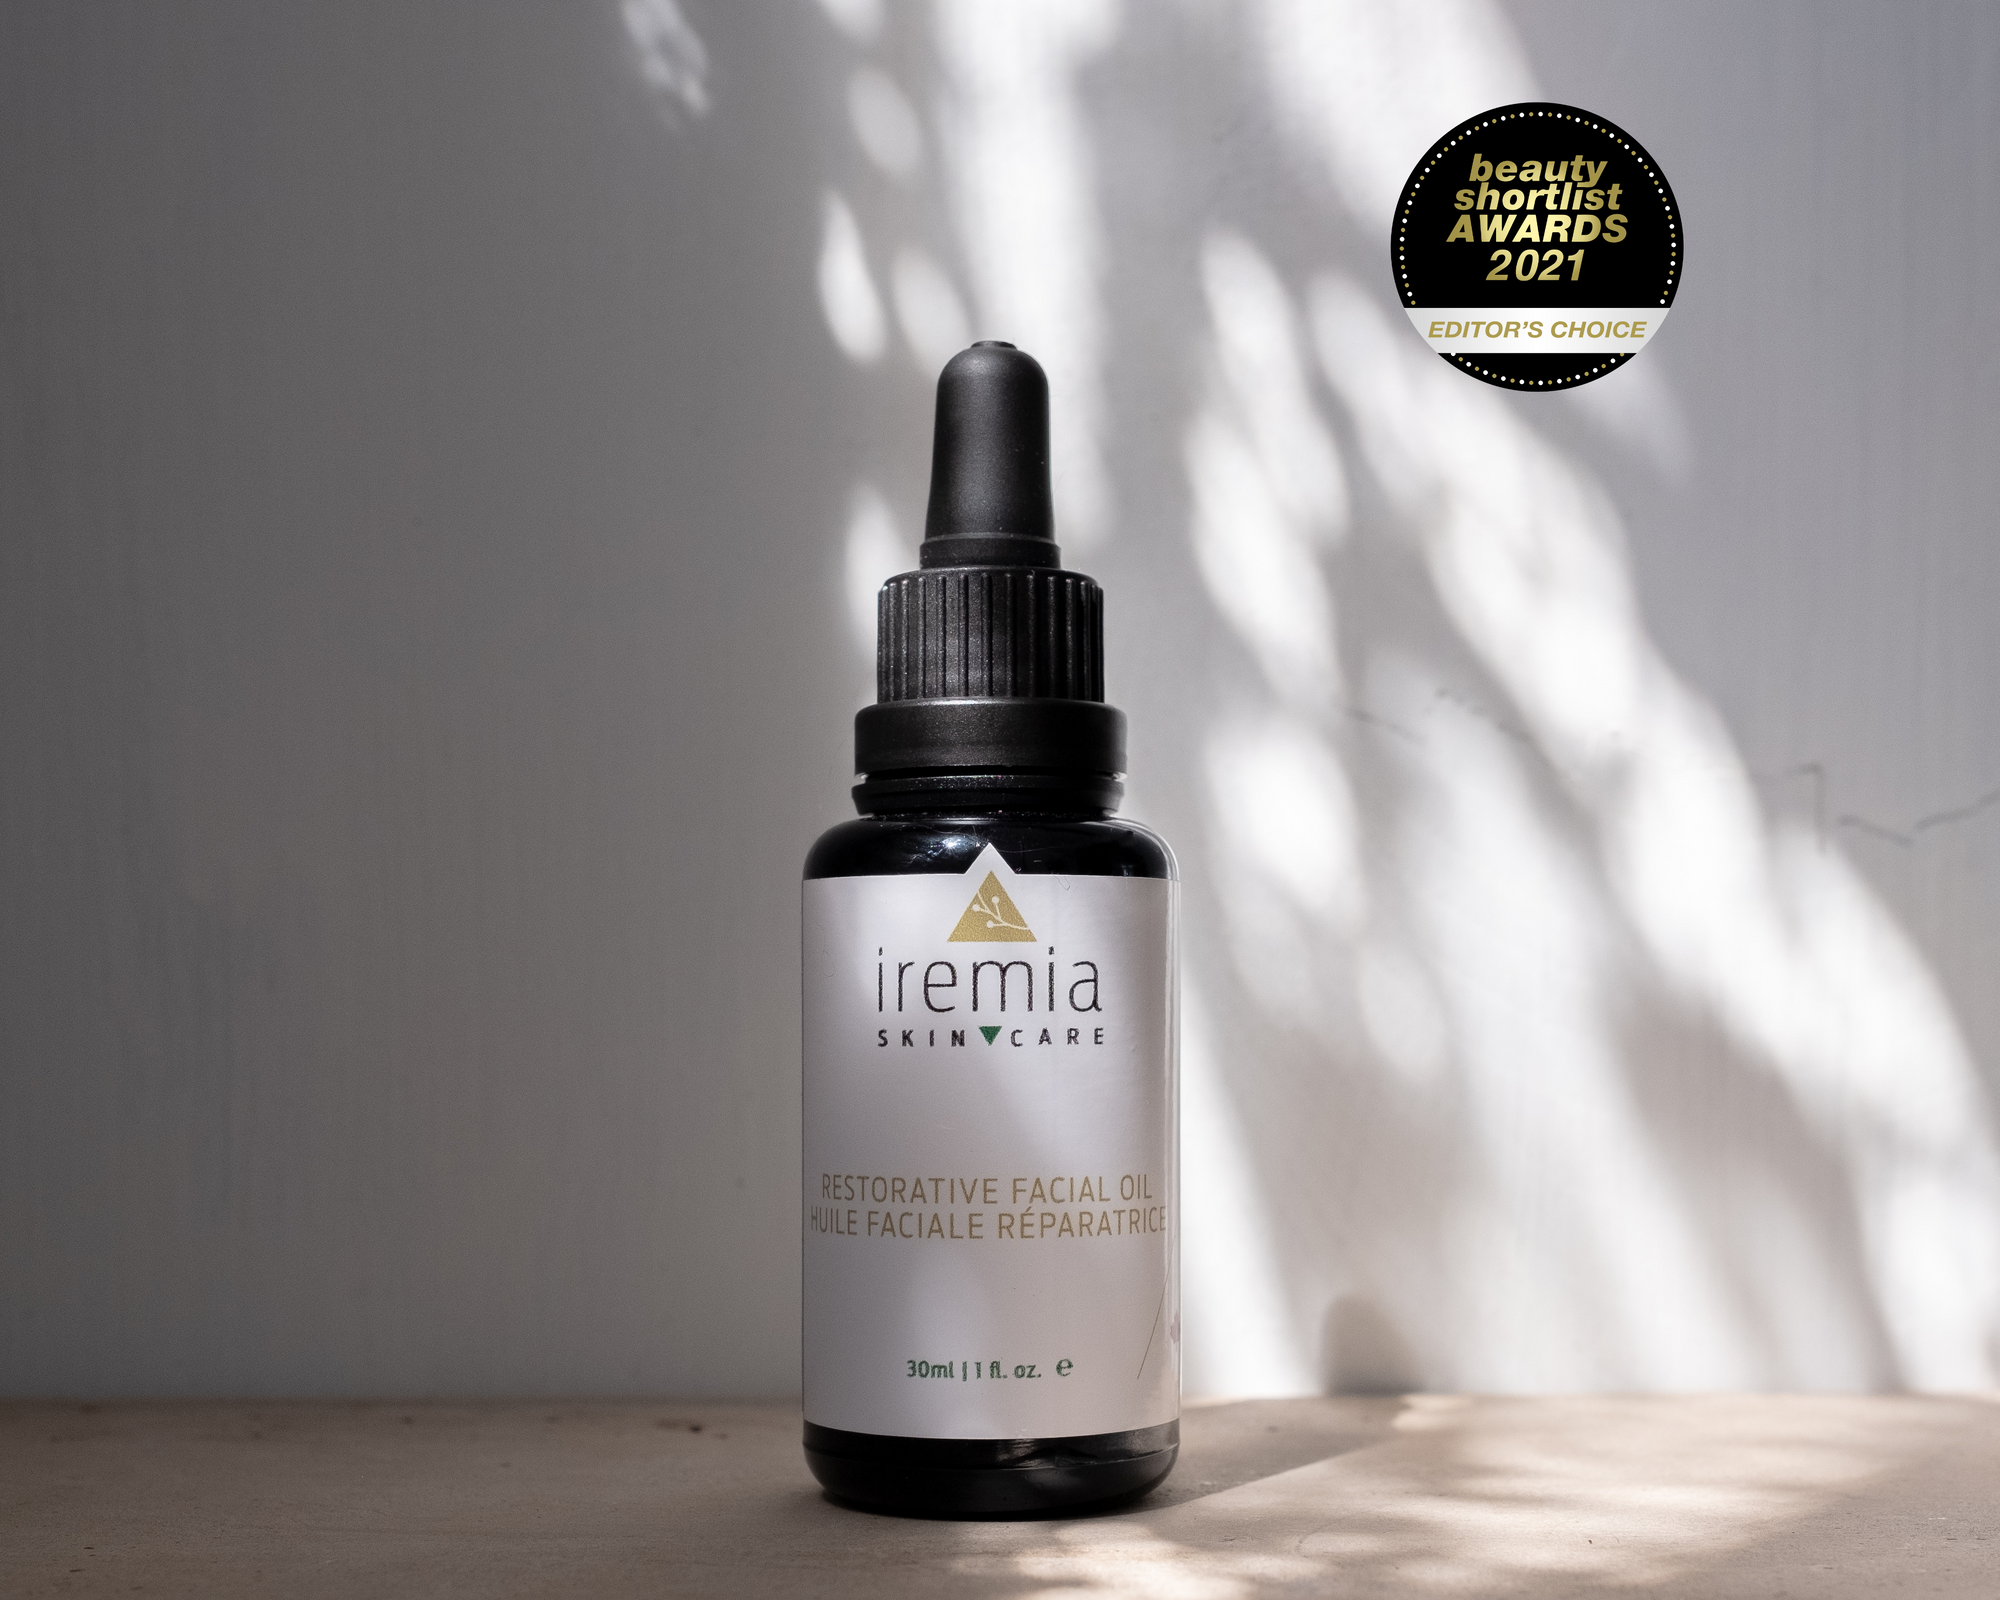 Iremia Skincare's Restorative Facial Oil wins a 2021 Beauty Shortlist Award